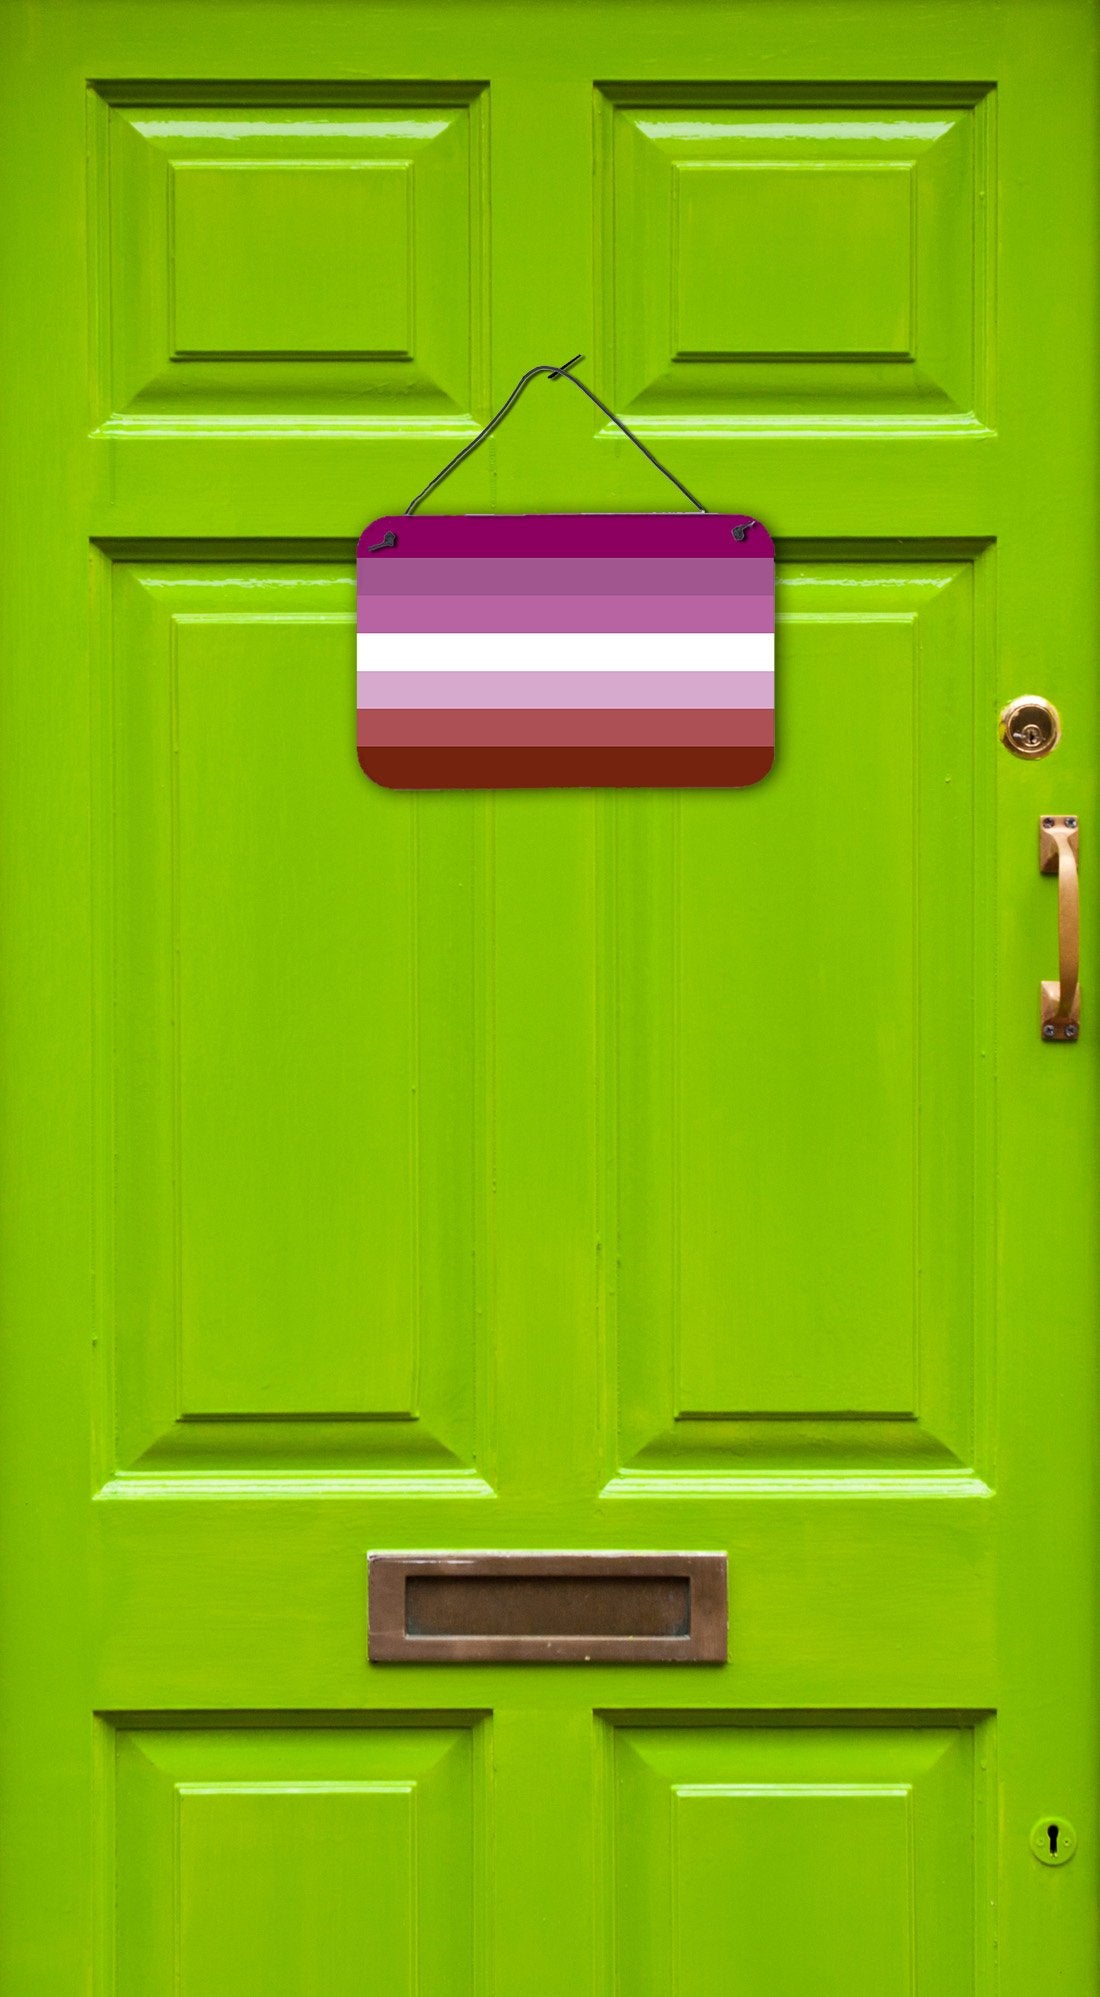 Buy this Lesbian Pride Wall or Door Hanging Prints